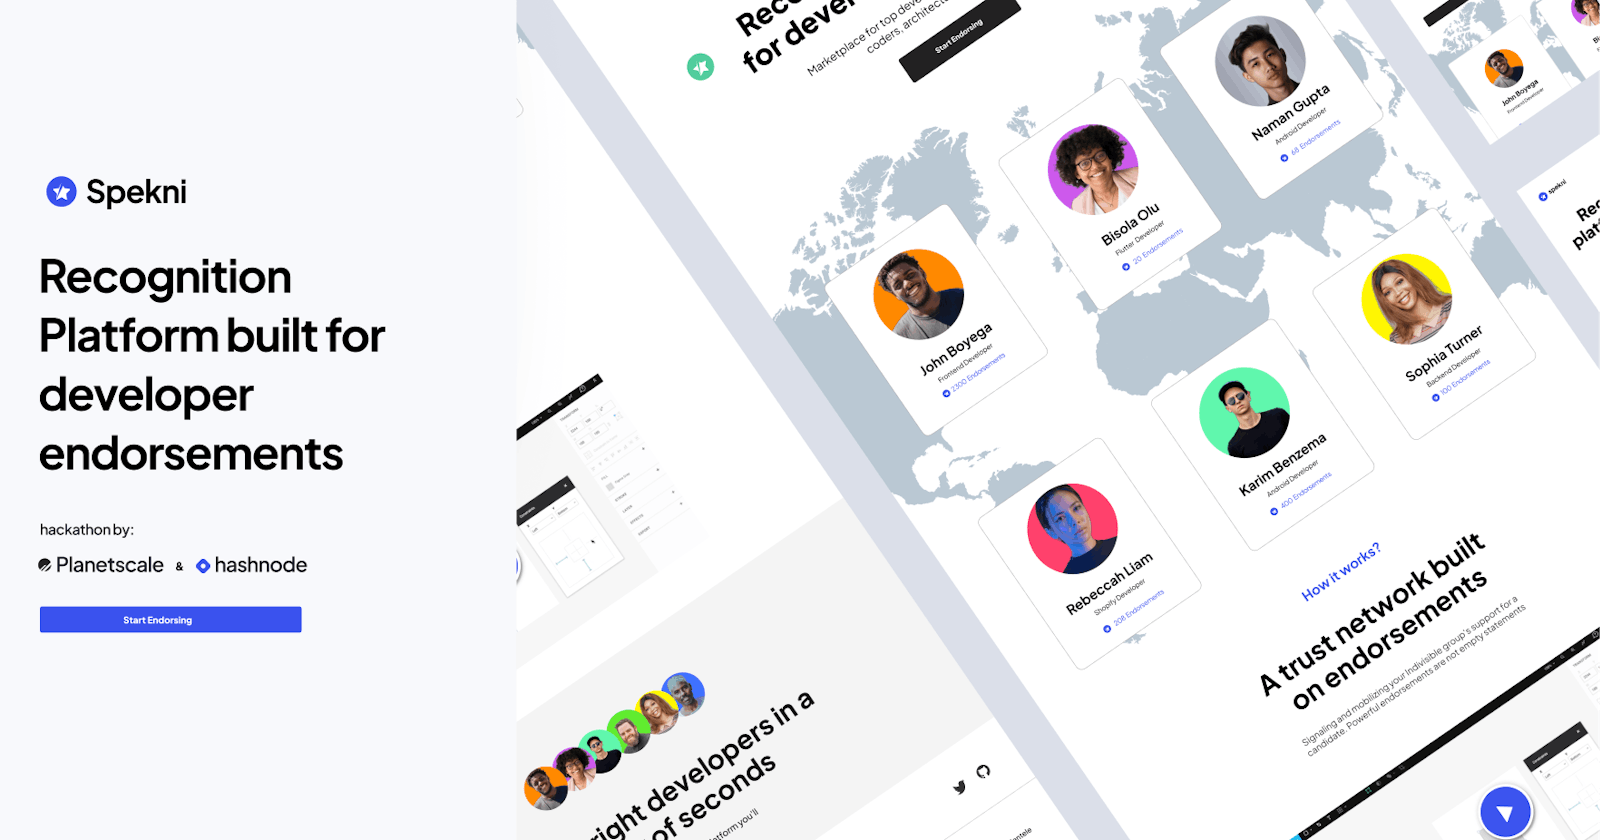 Spekni - A recognition platform built for developer endorsements